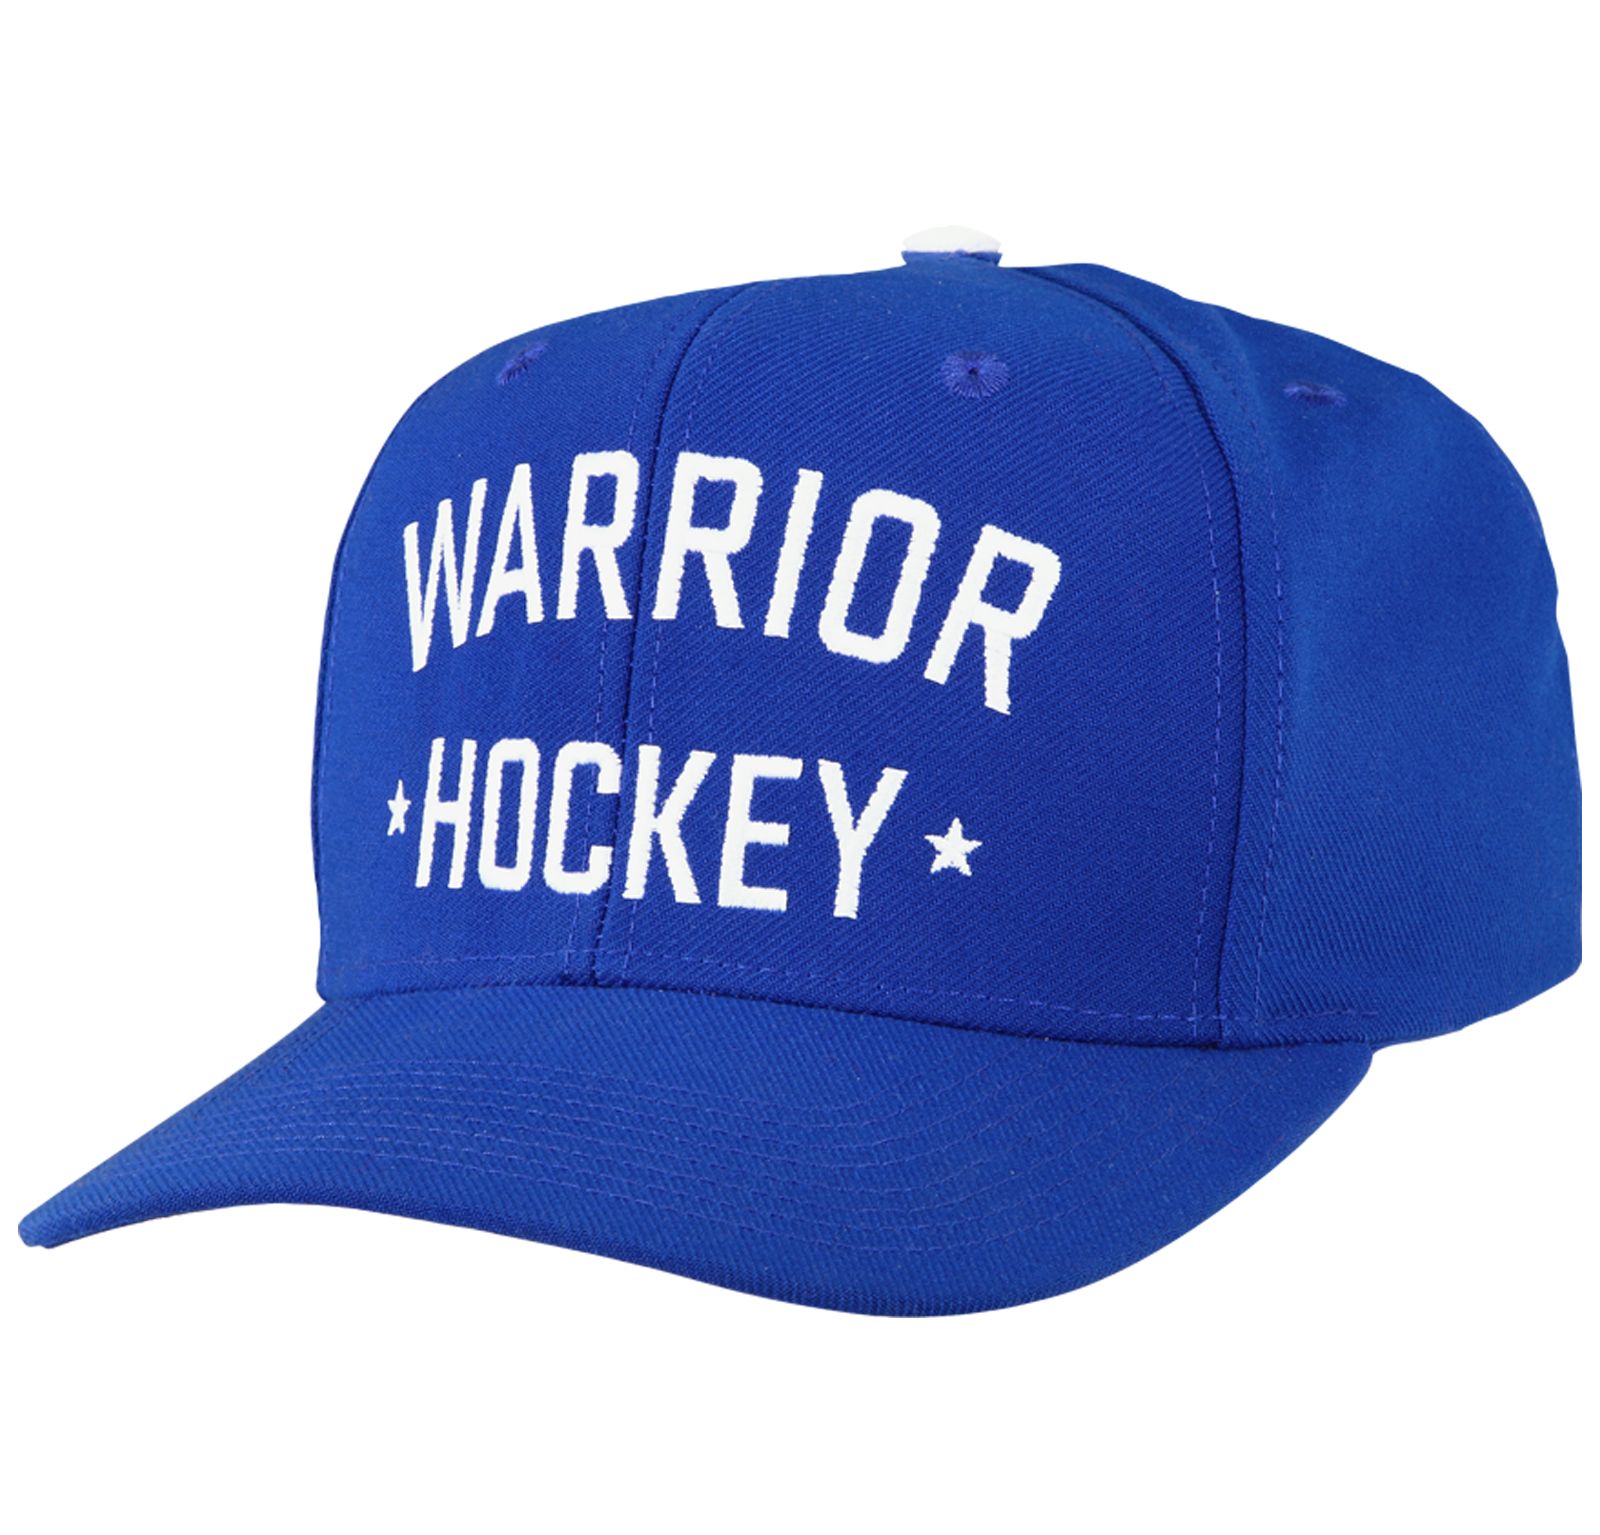 Warrior Hockey Street Snapback Hat, Royal Blue image number 0